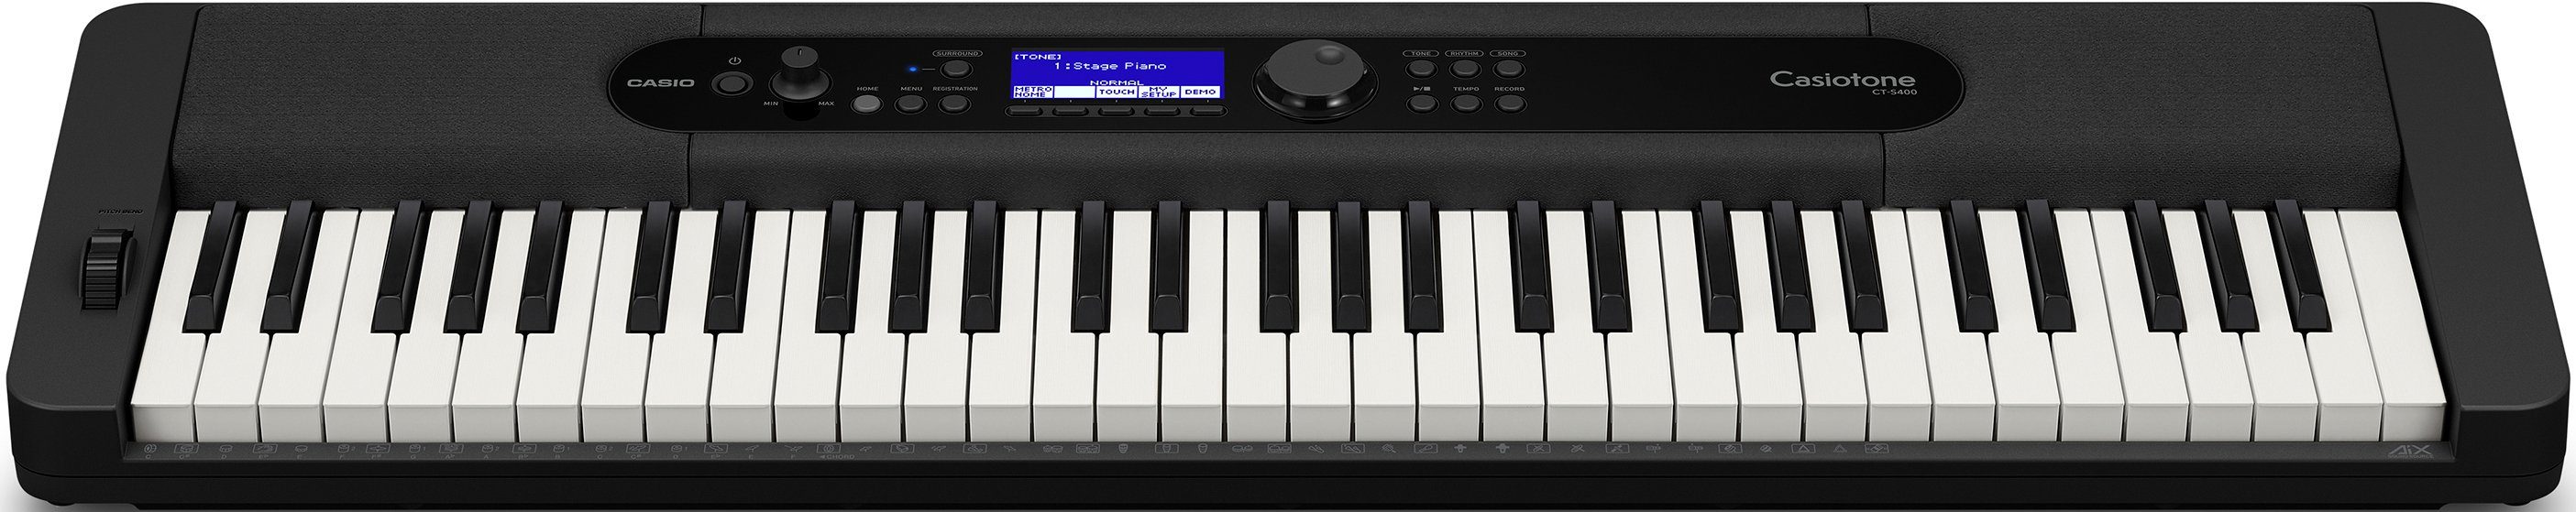 CASIO Keyboard Standardkeyboard CT-S400, inkl. Netzteil